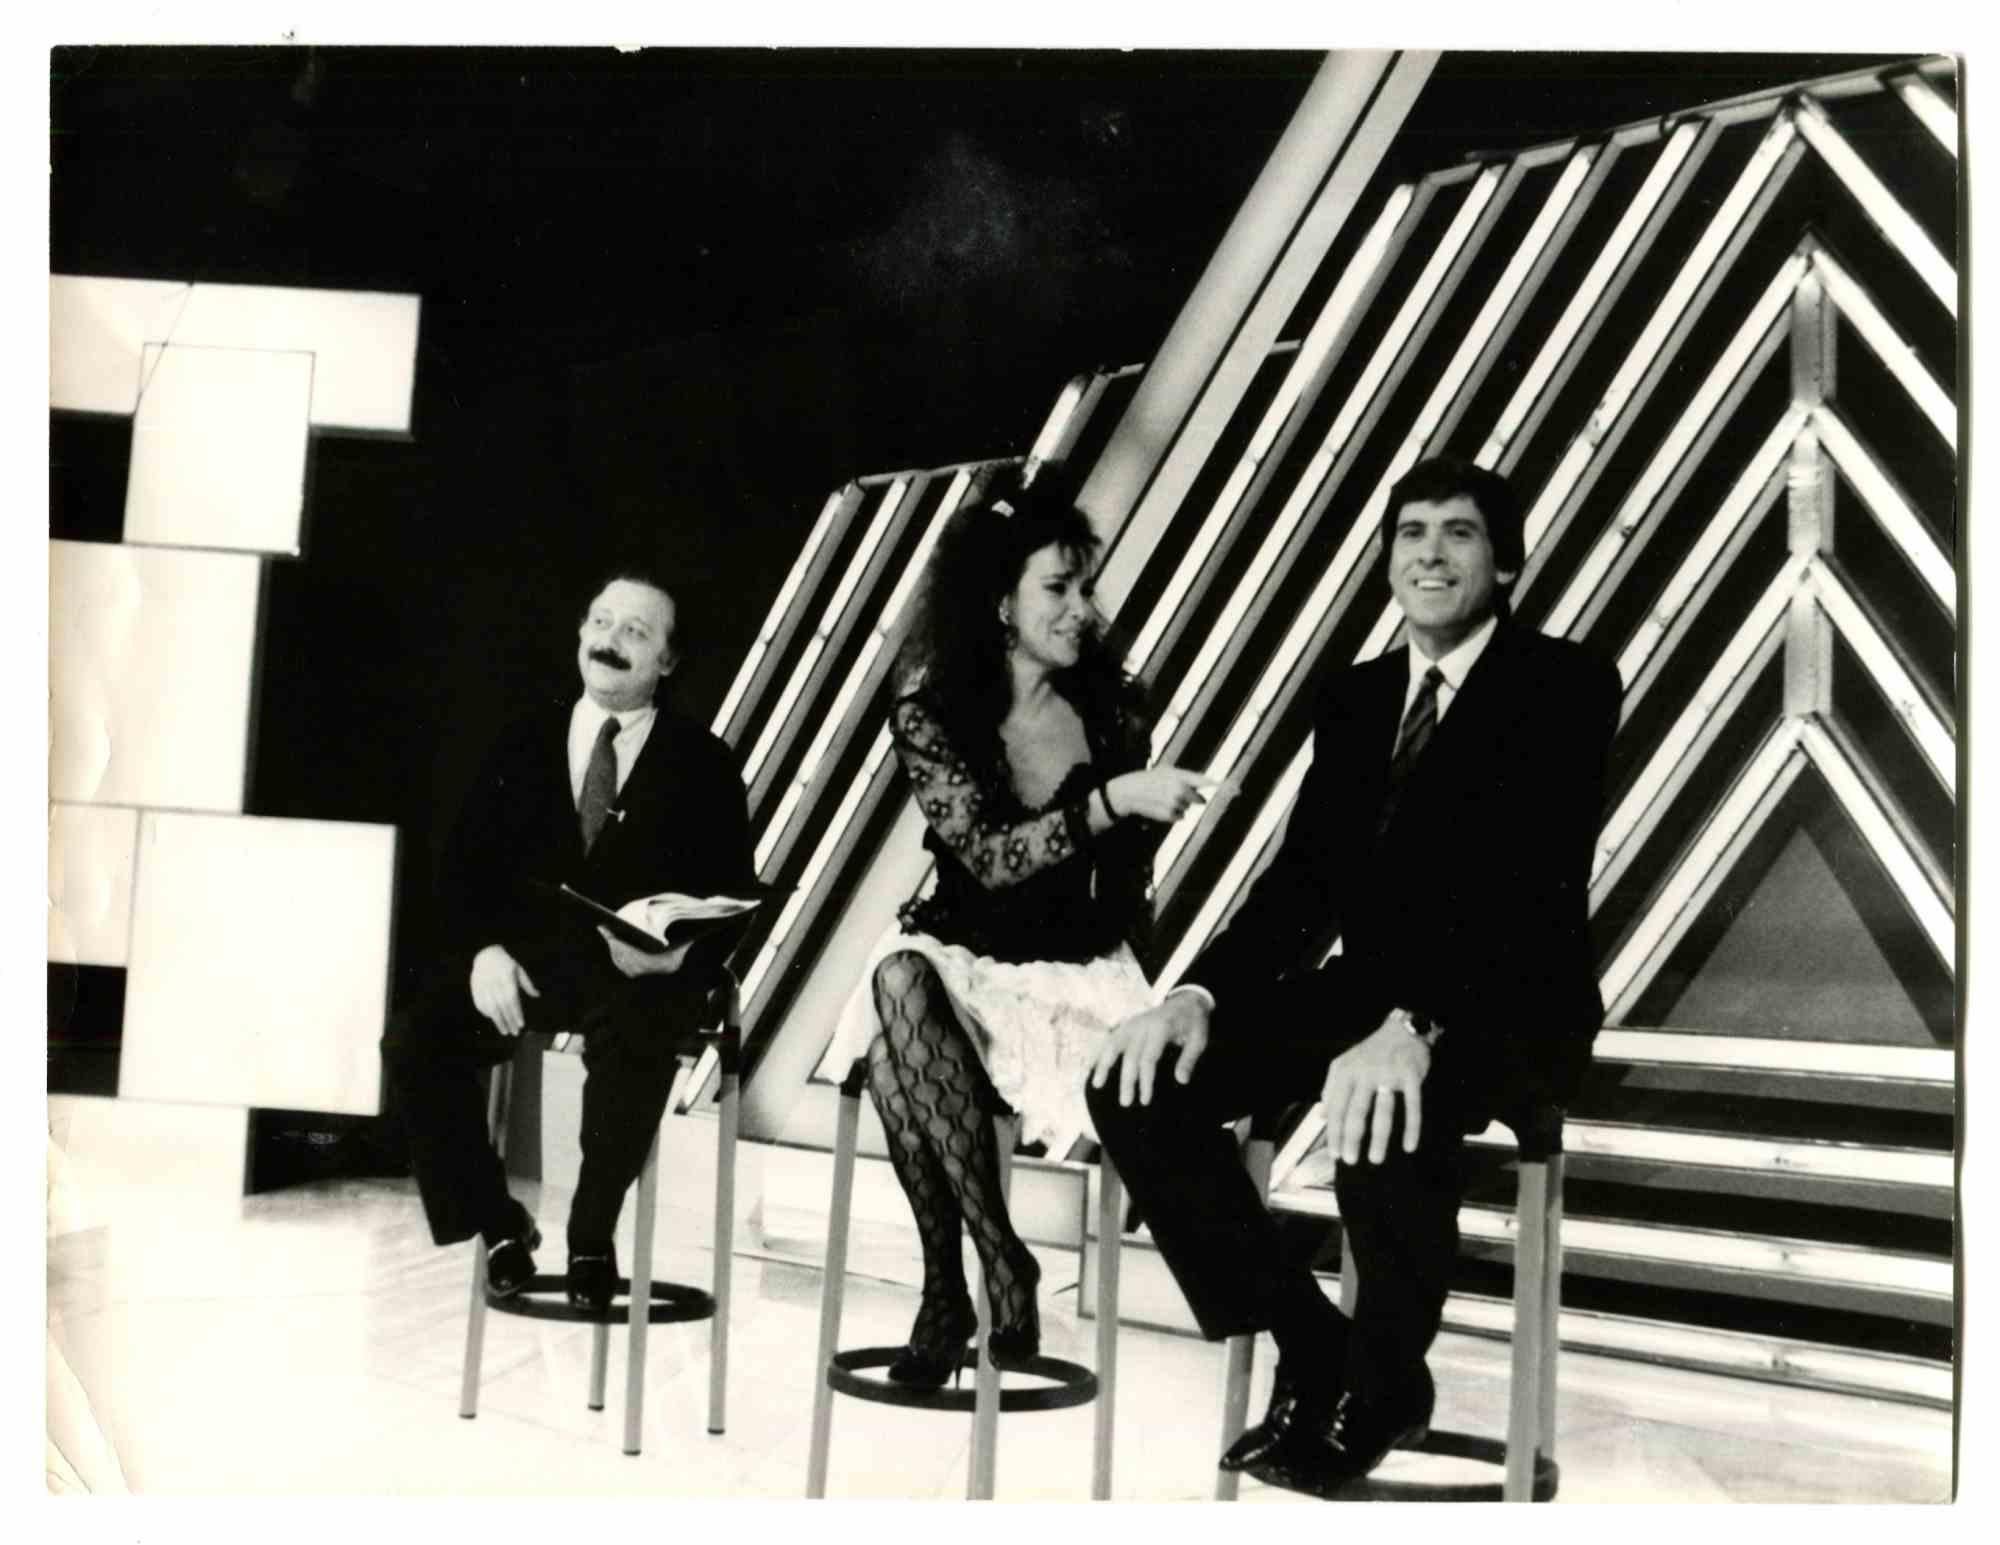 Portrait Photograph Unknown - Gianni Minà, Ana Obregon et Gianni Morandi - Photo - années 1980